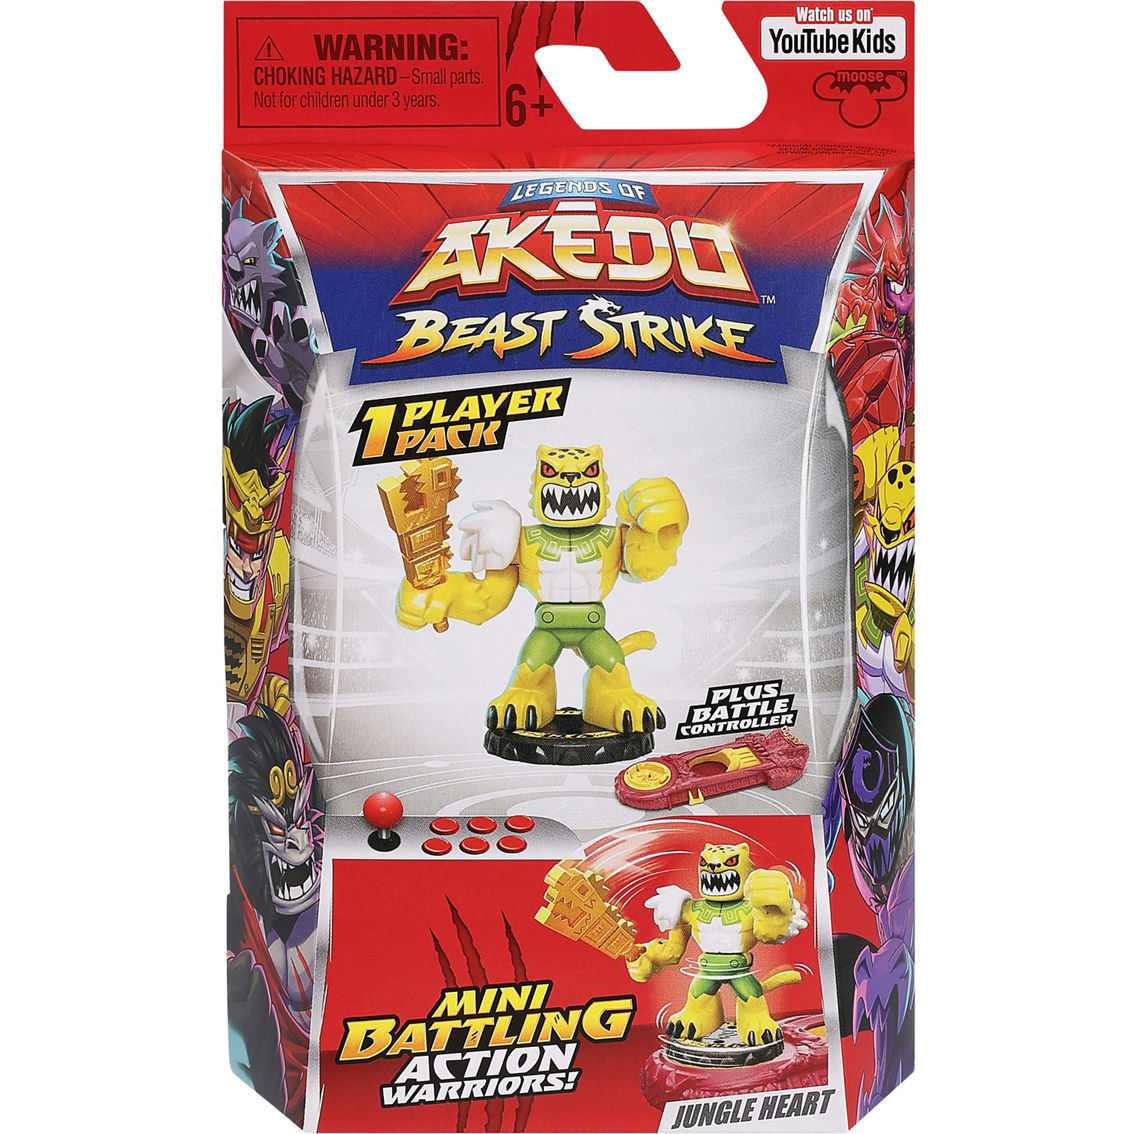 Legends of Akedo Beast Strike Stink King Mini Figure Single Pack - Image 6 of 9